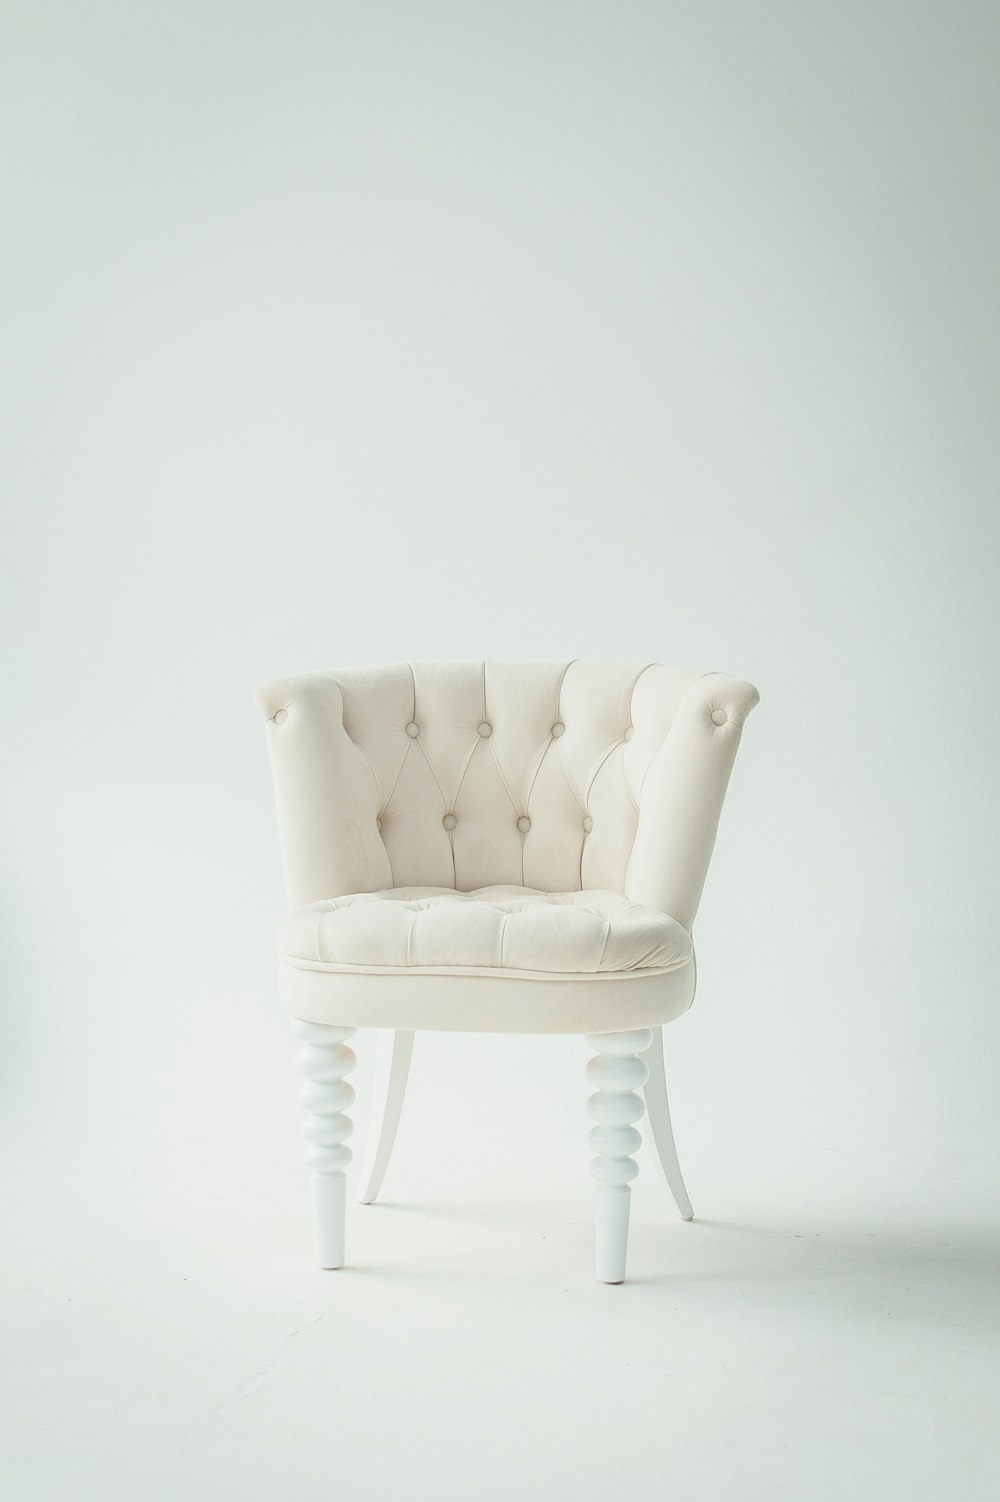 tufted white leather sofa chair photo – Free Image on Unsplash